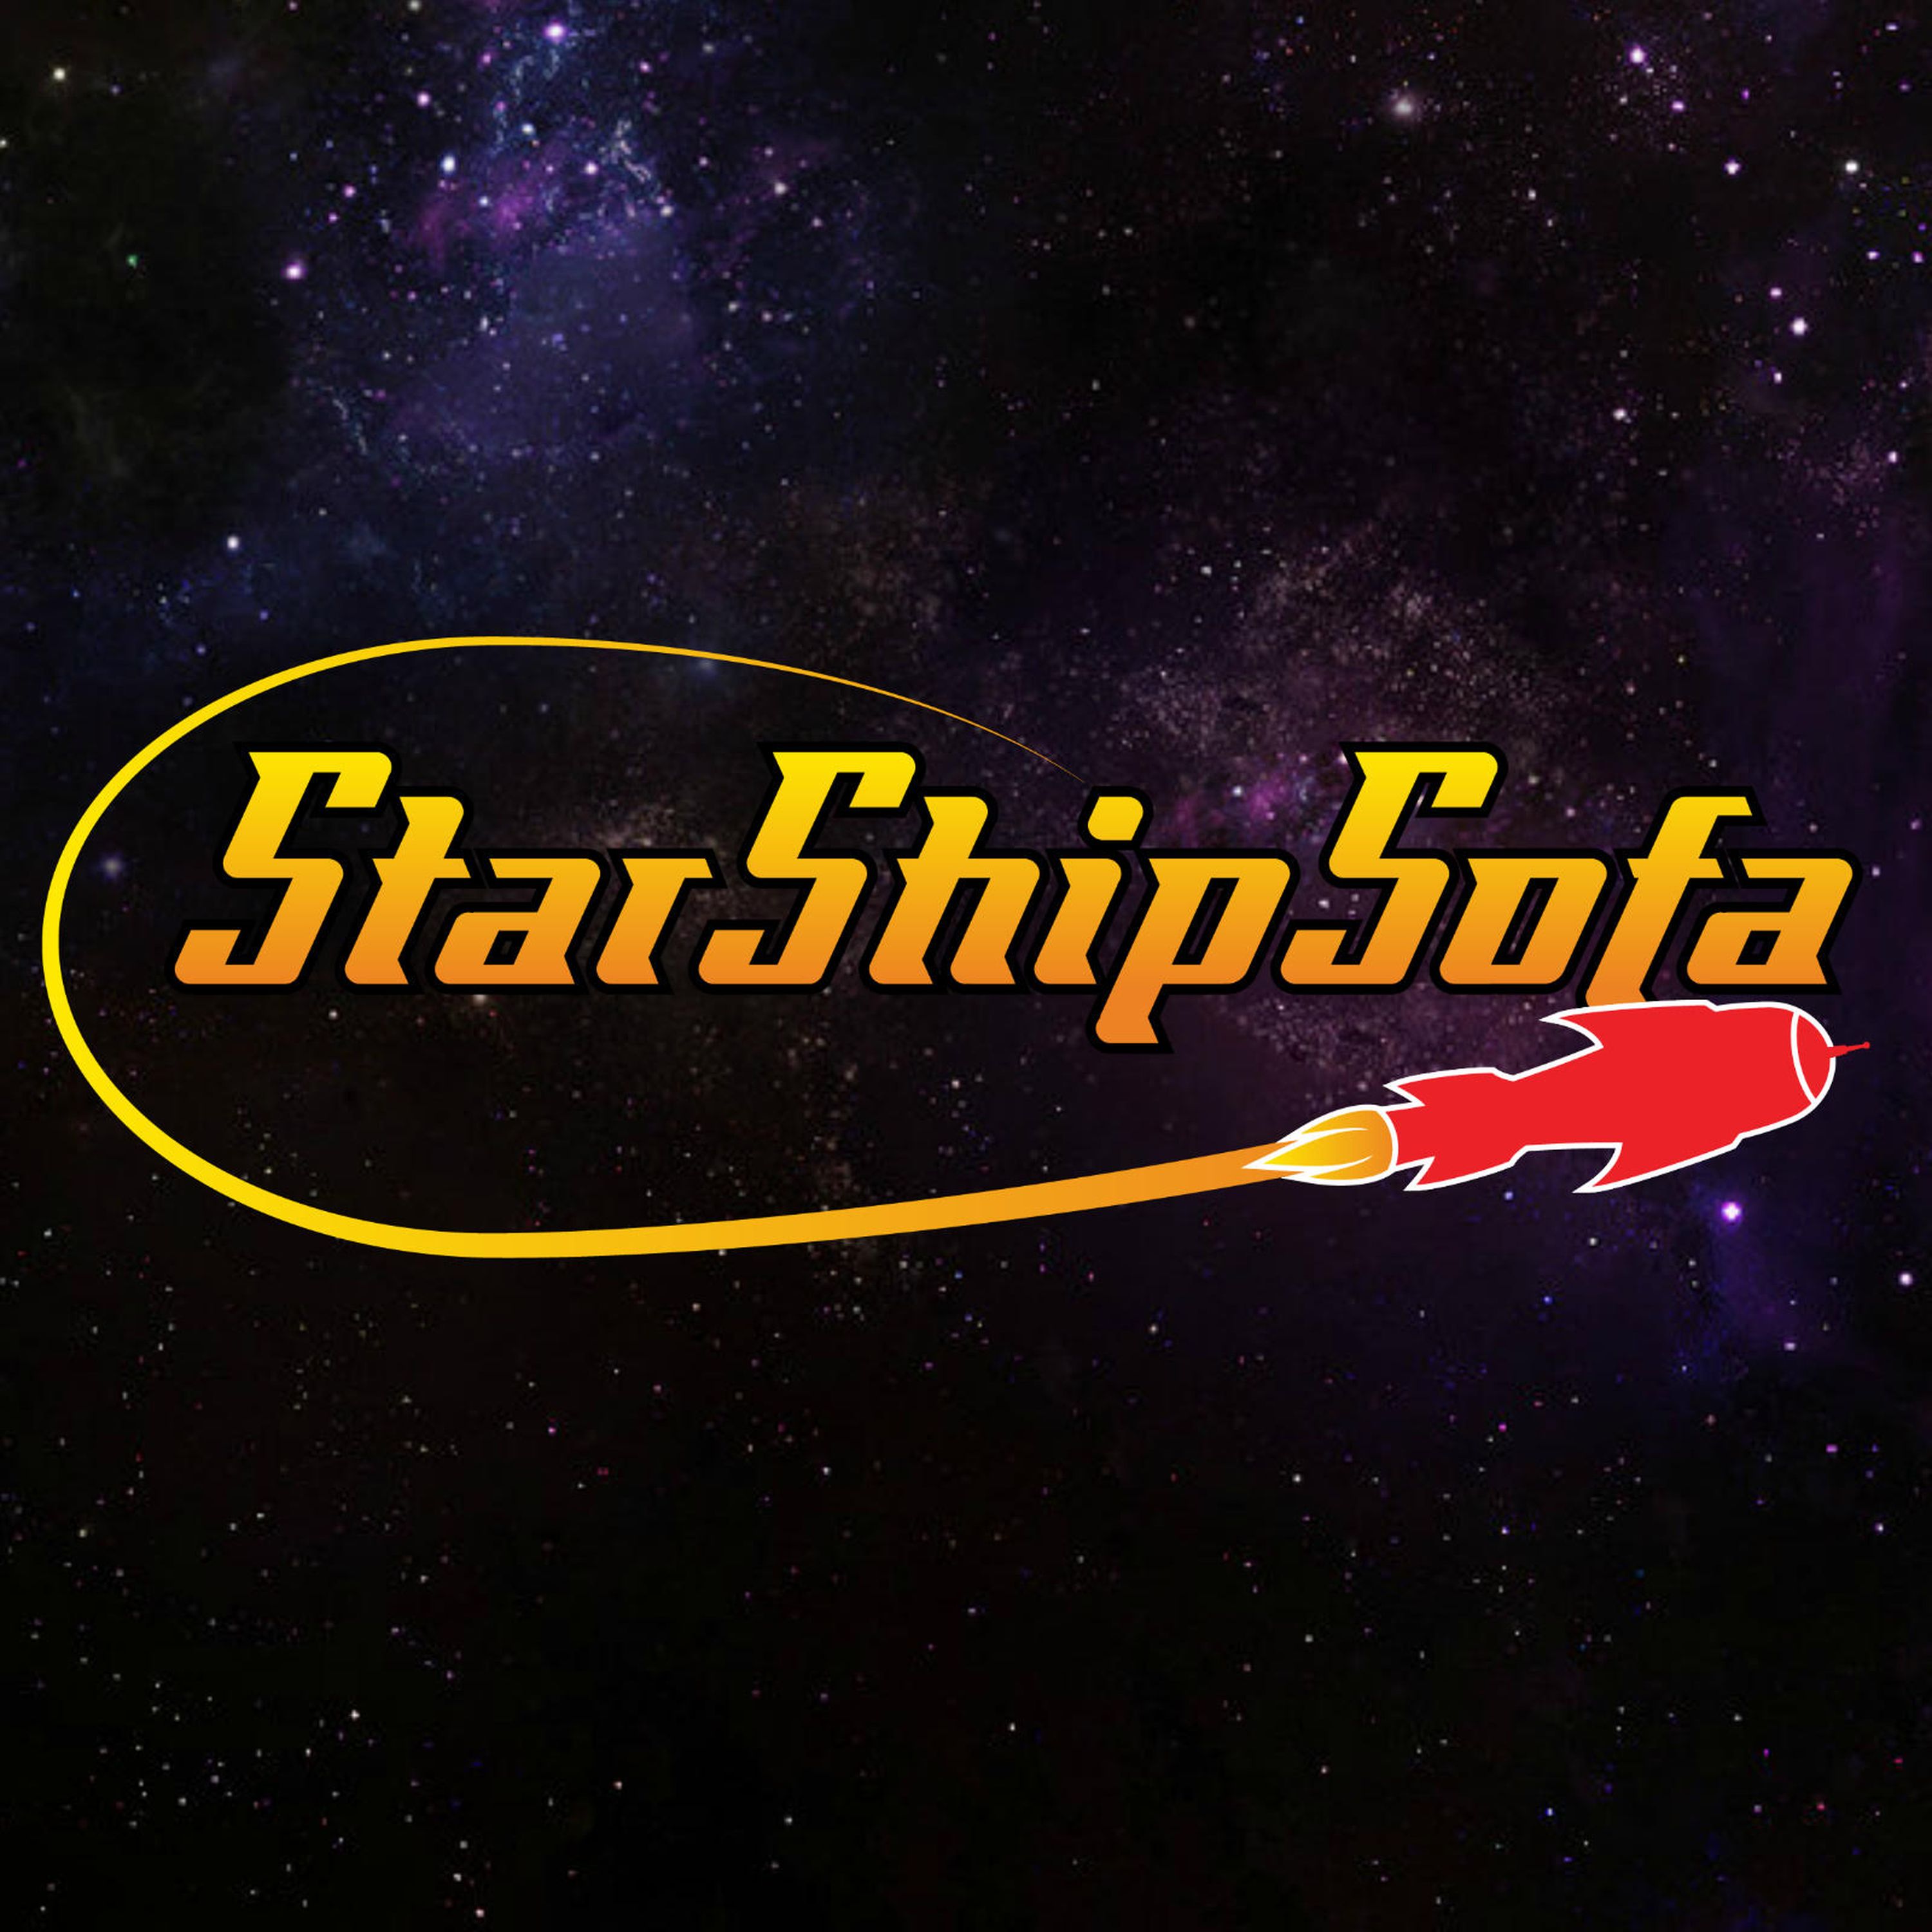 StarShipSofa No 565 David Barr Kirtley